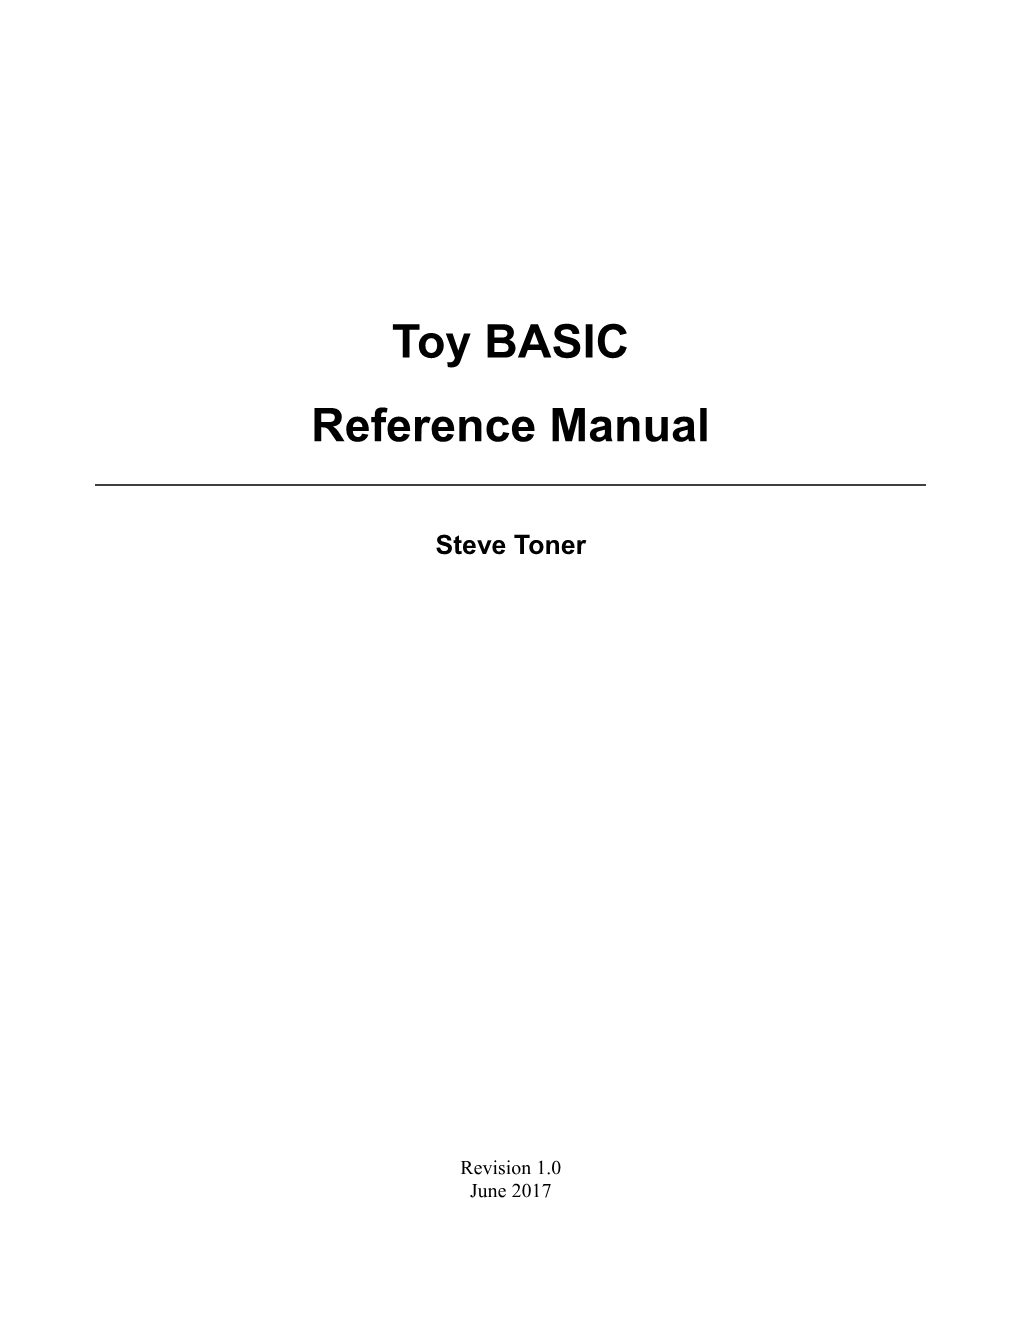 Toy BASIC Reference Manual